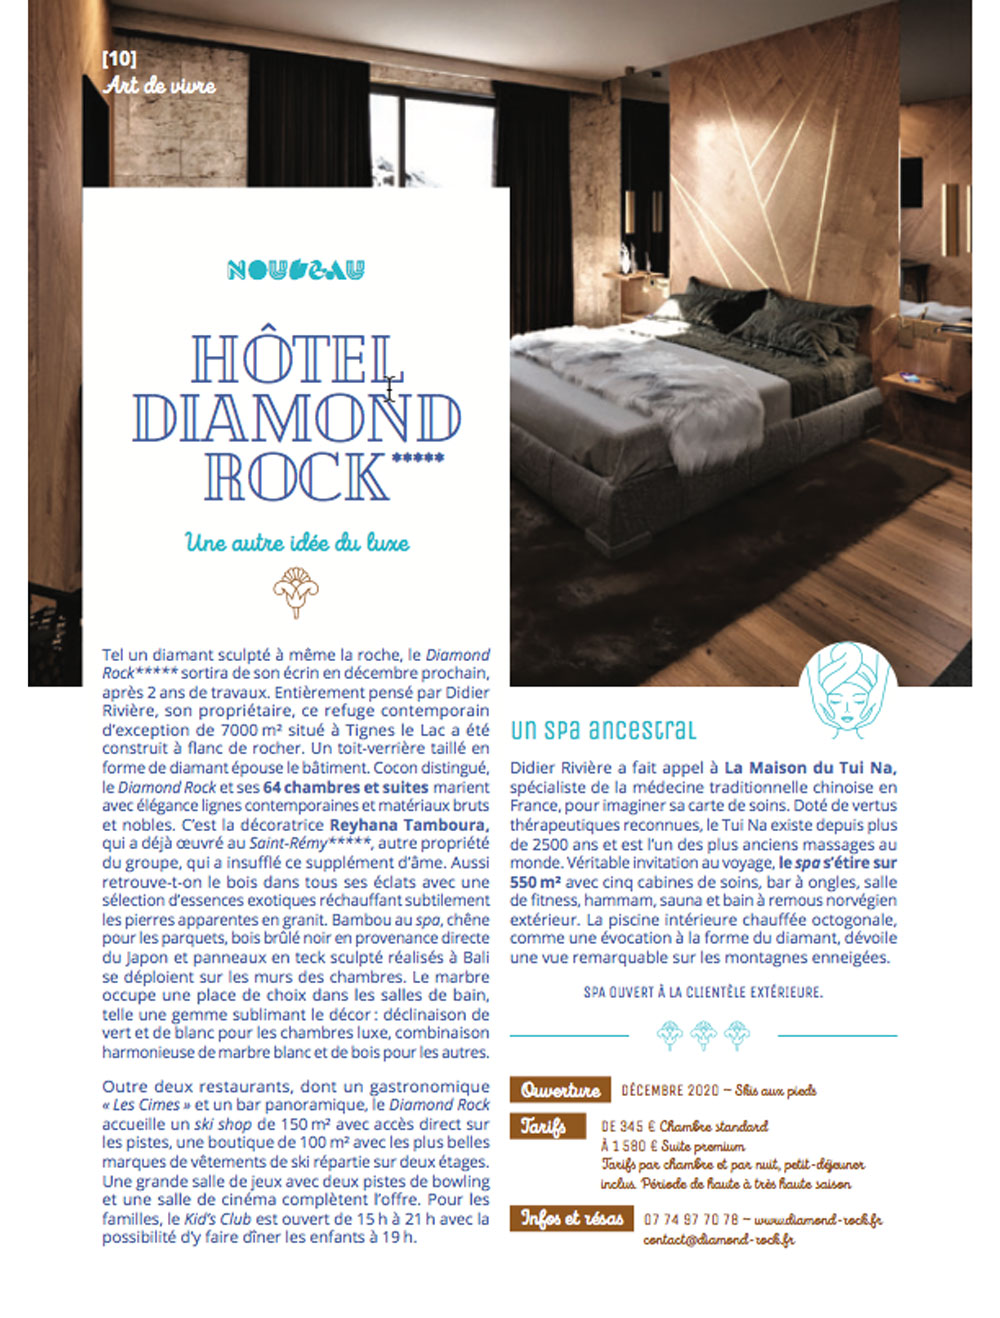 diamond-rock-hotel-lodge2